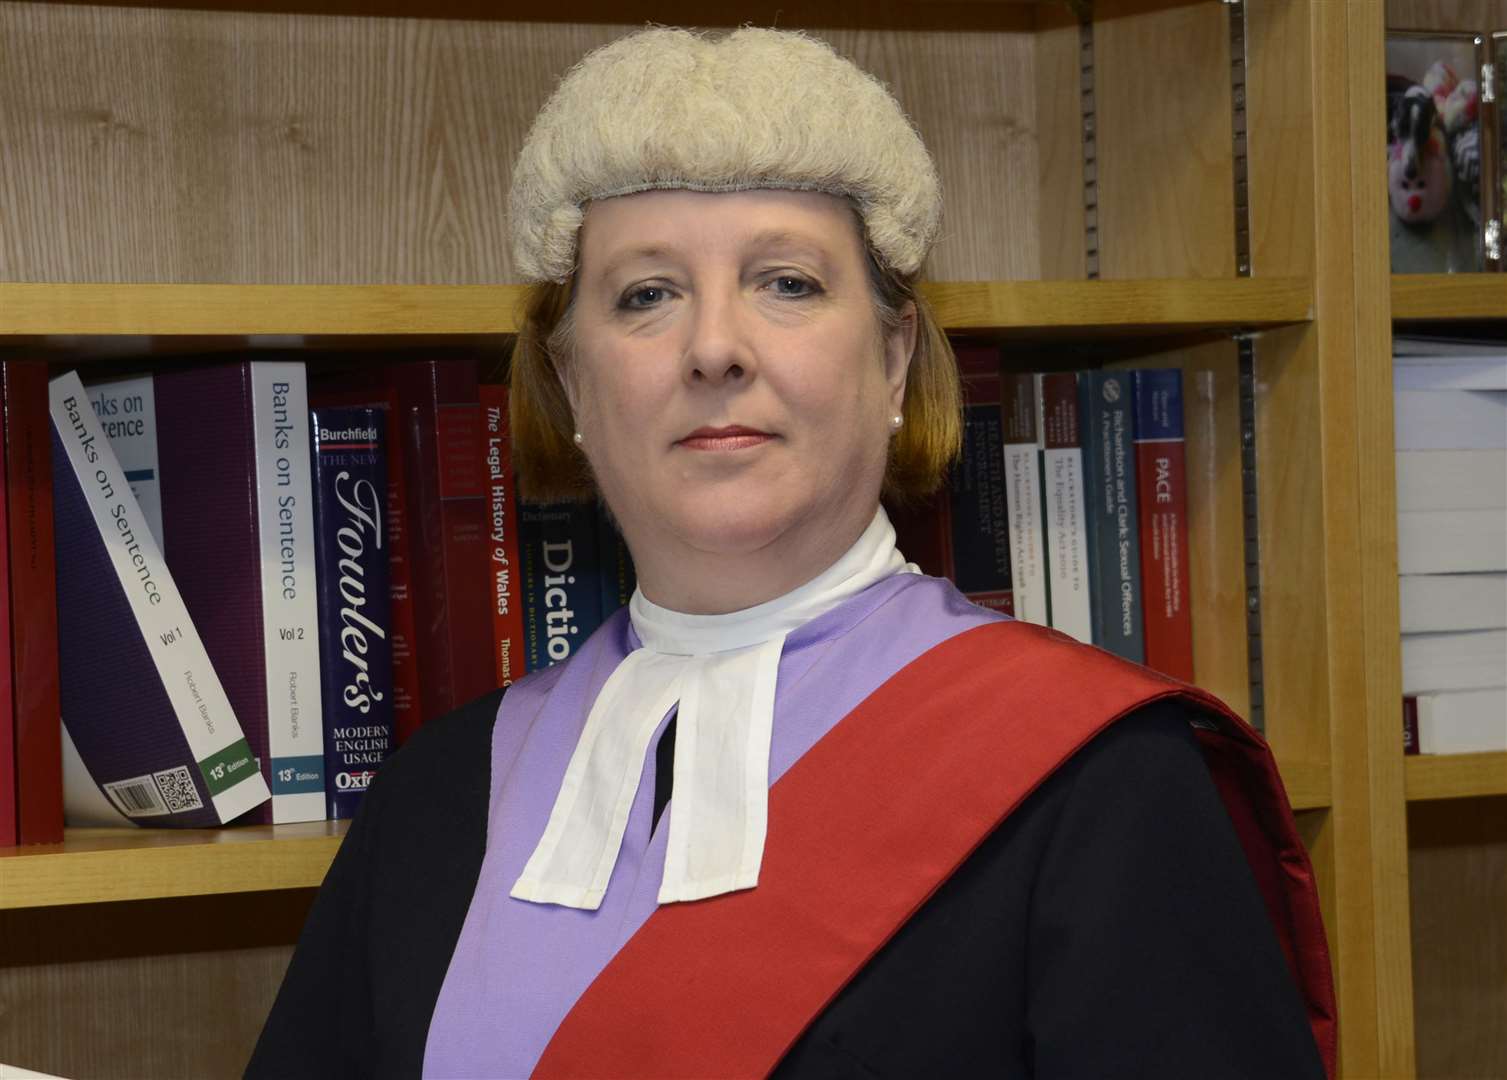 Judge Catherine Brown branded Morris' criminal history "appalling"